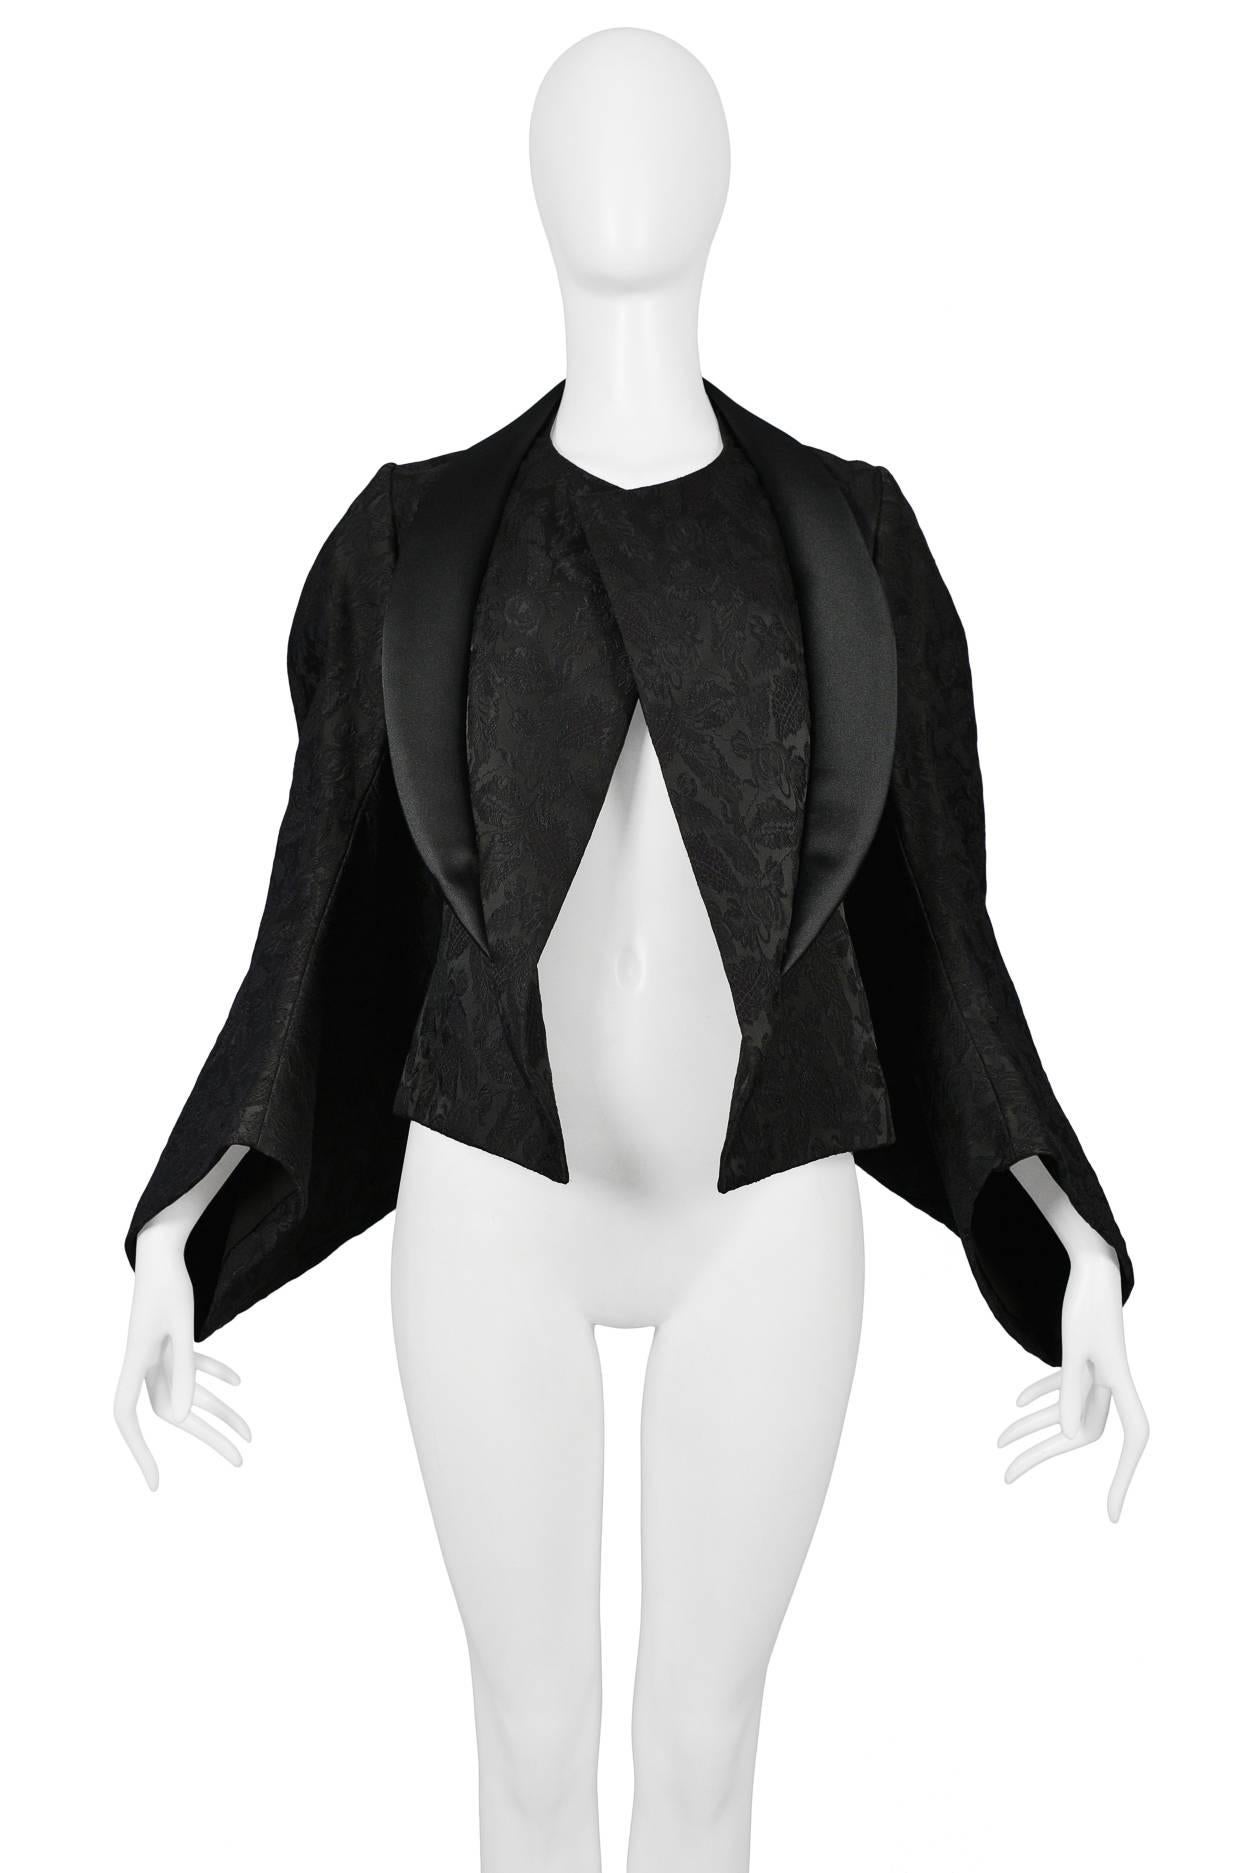 Comme des Garcons black on black brocade kimono sleeve jacket featuring a black satin collar and a voluminous side profile. Circa Autumn / Winter 2004.